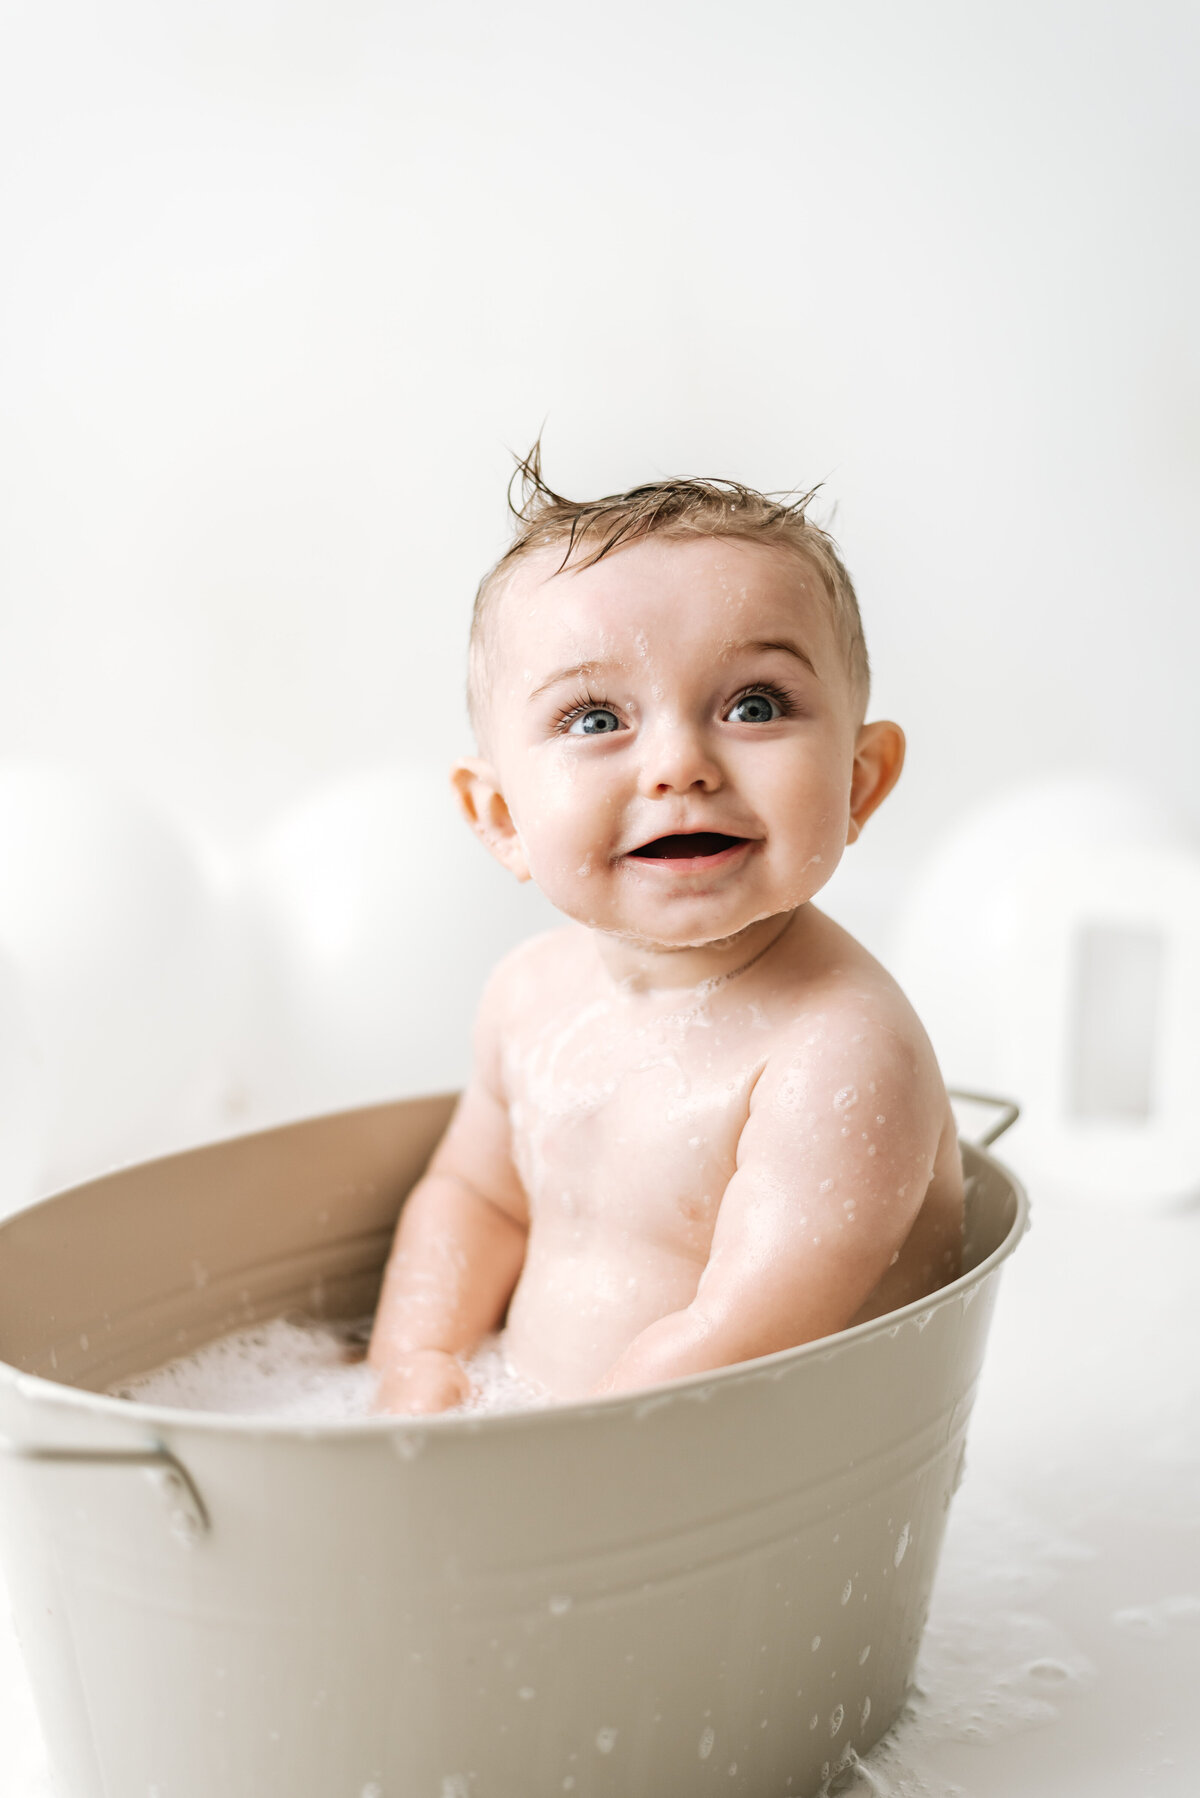 Baby boy in a bath at billingshurst cake smash photoshoot